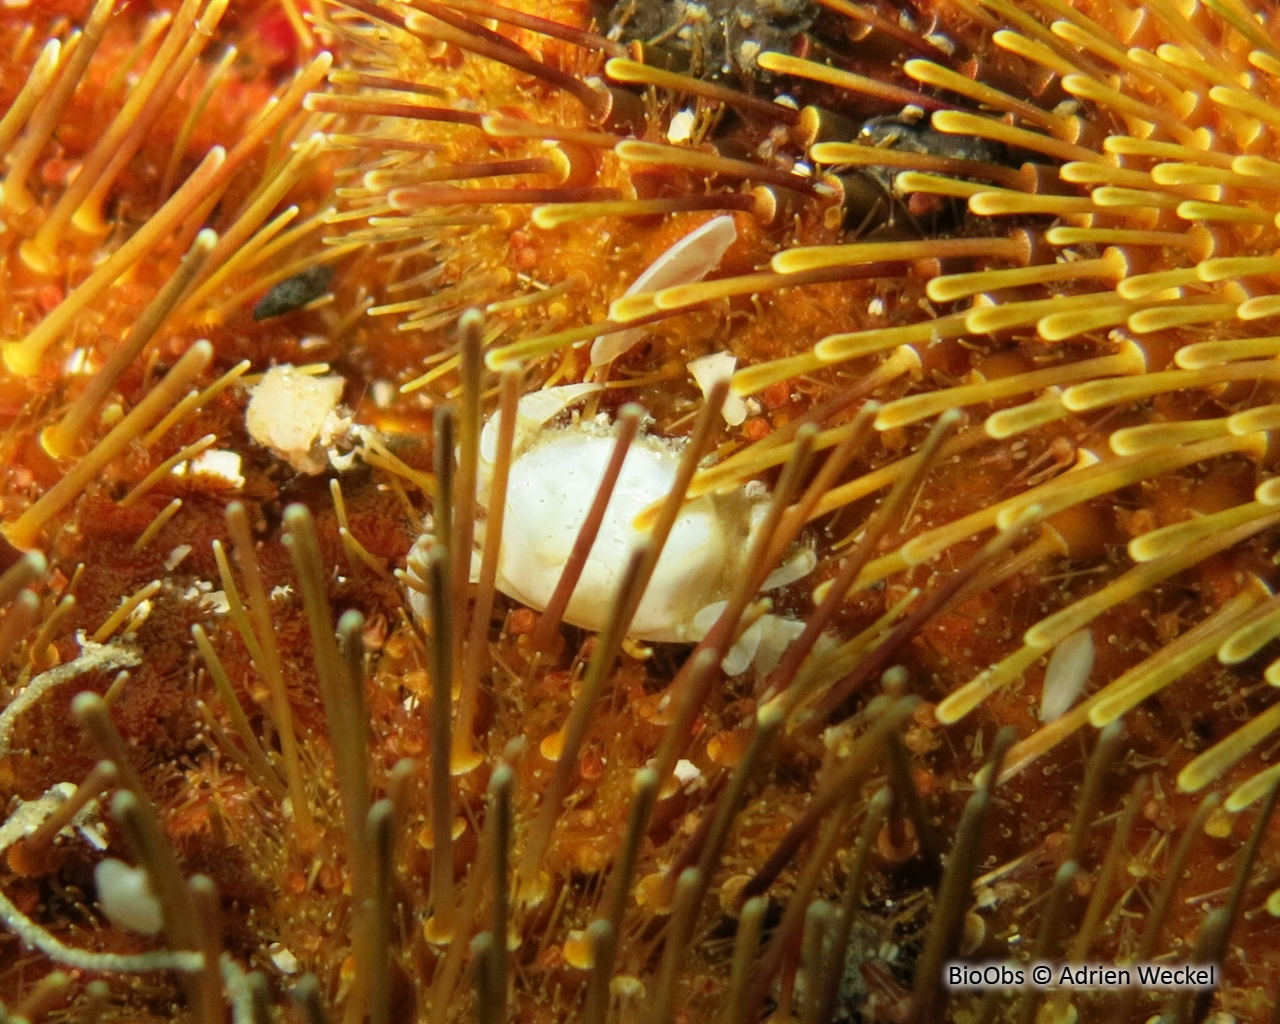 Crabe-pois des spatangues - Dissodactylus primitivus - Adrien Weckel - BioObs